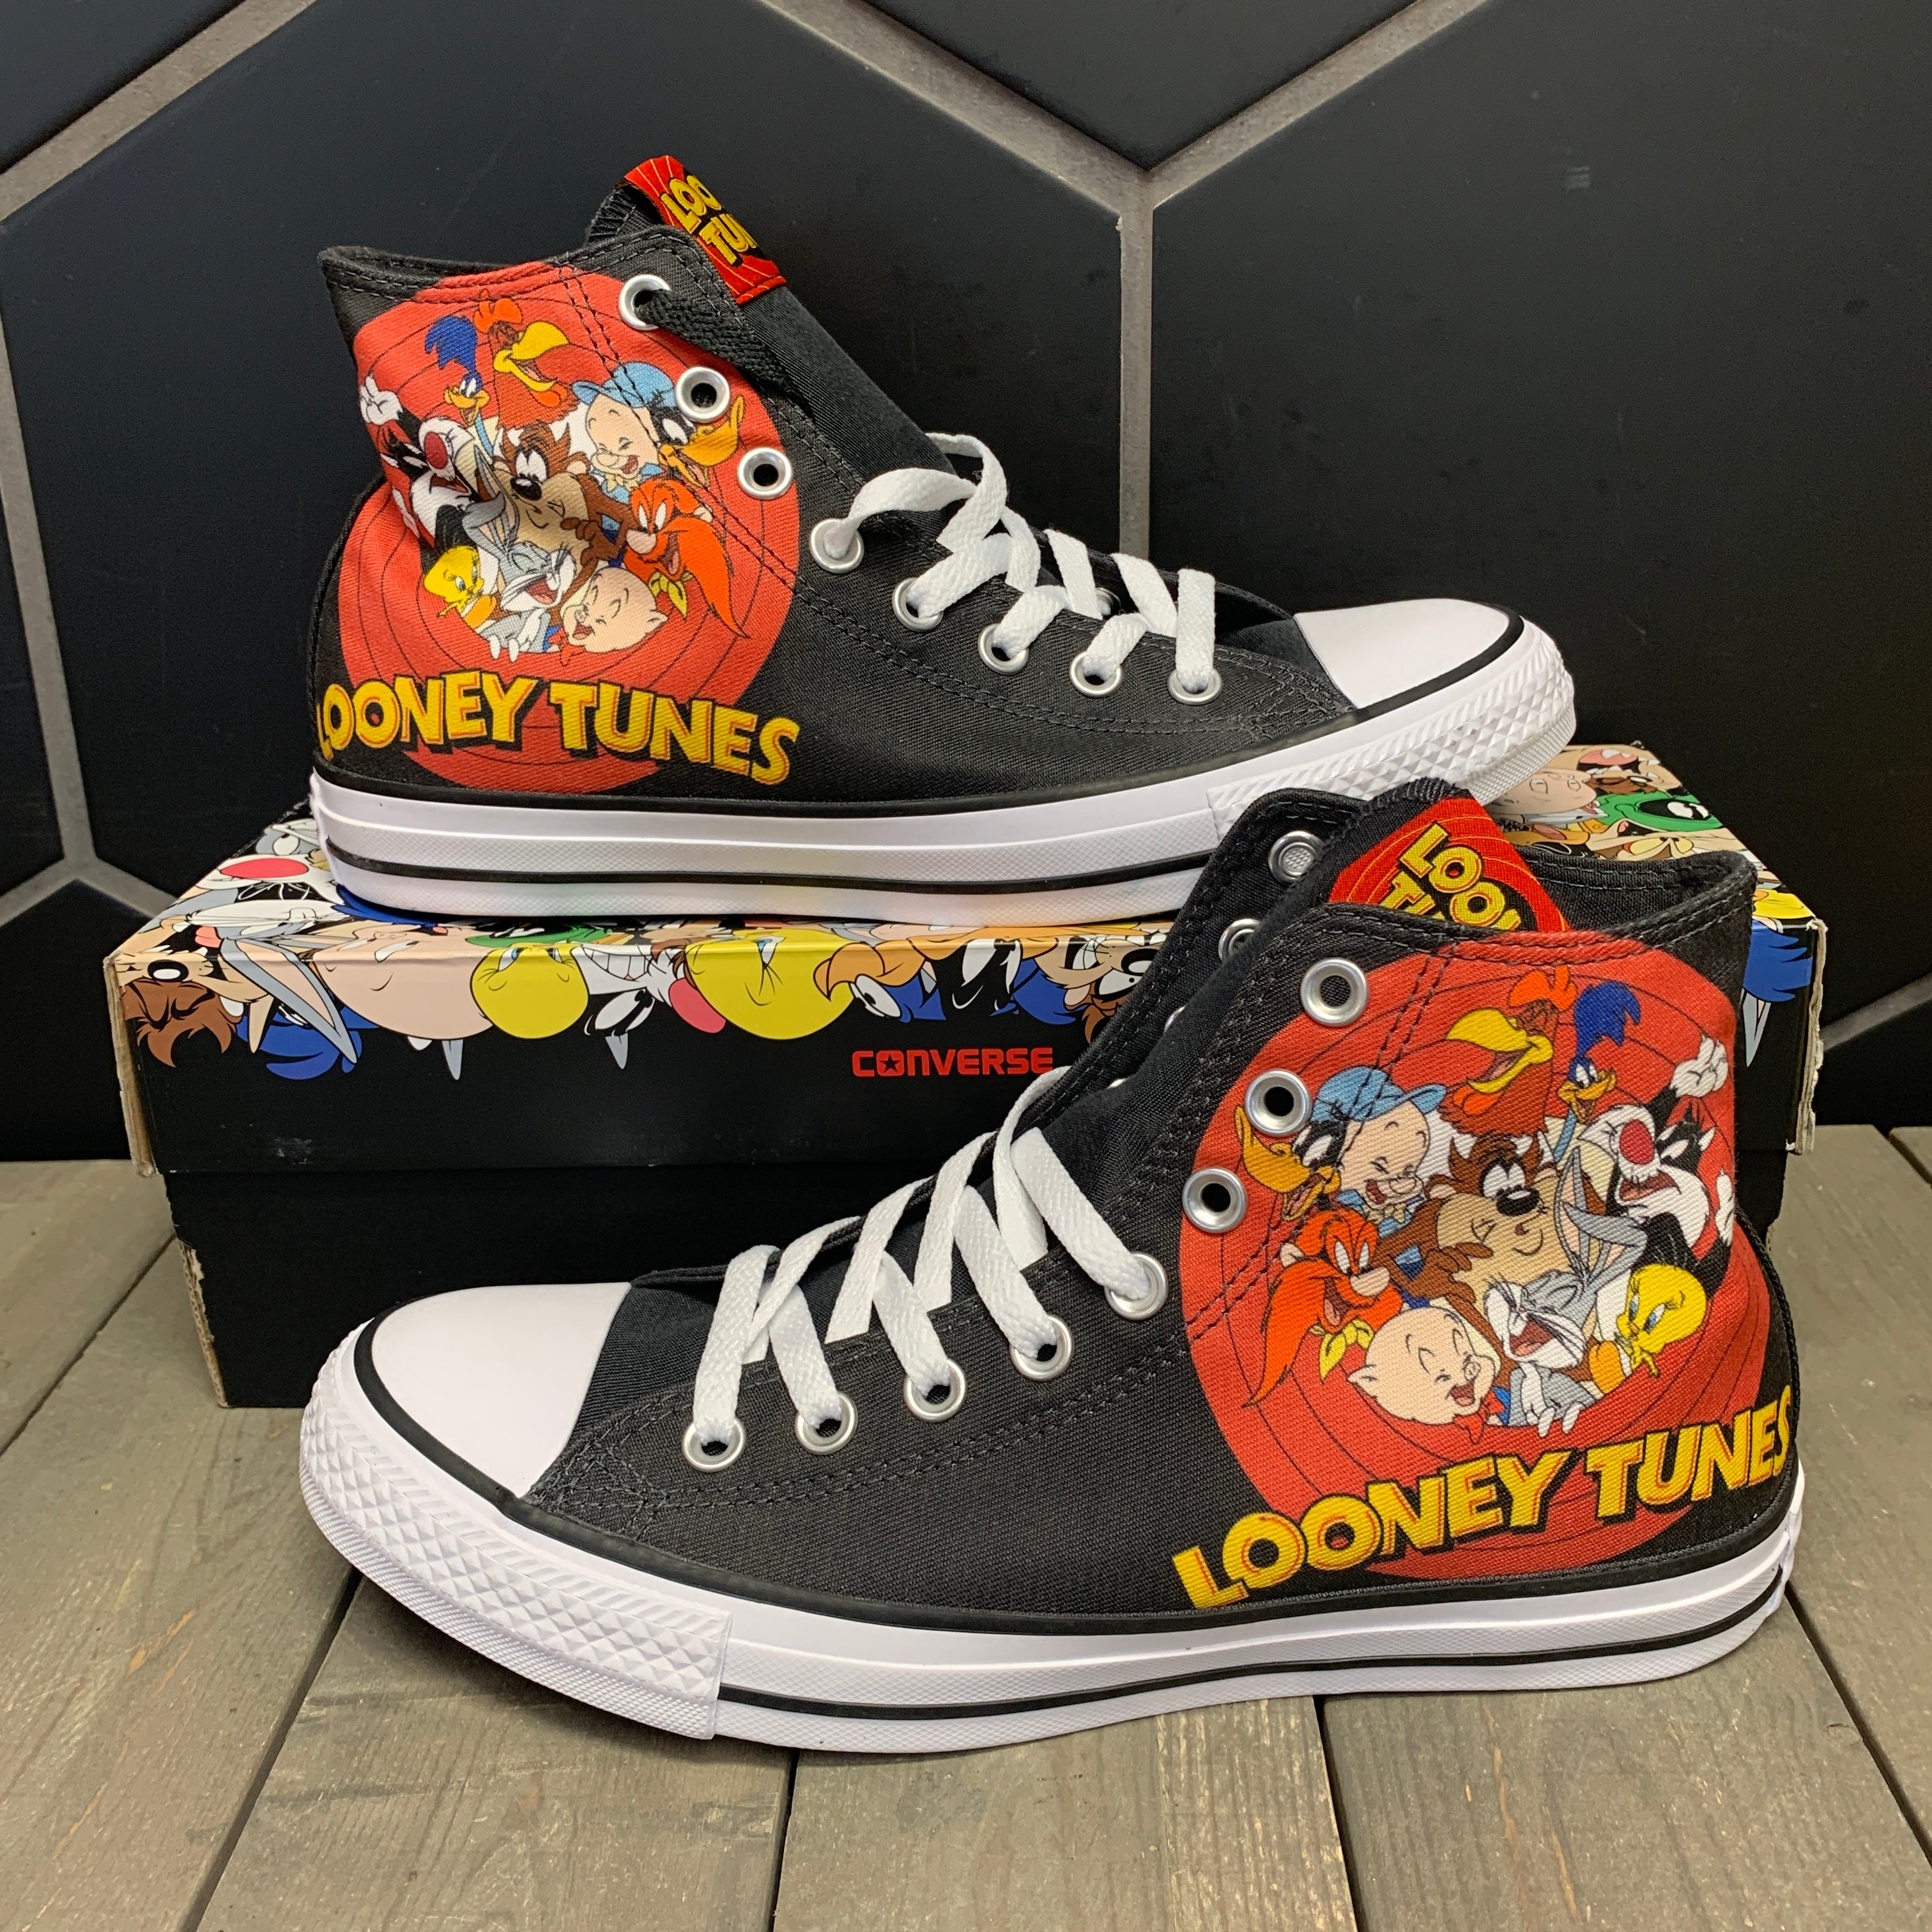 looney tunes converse box